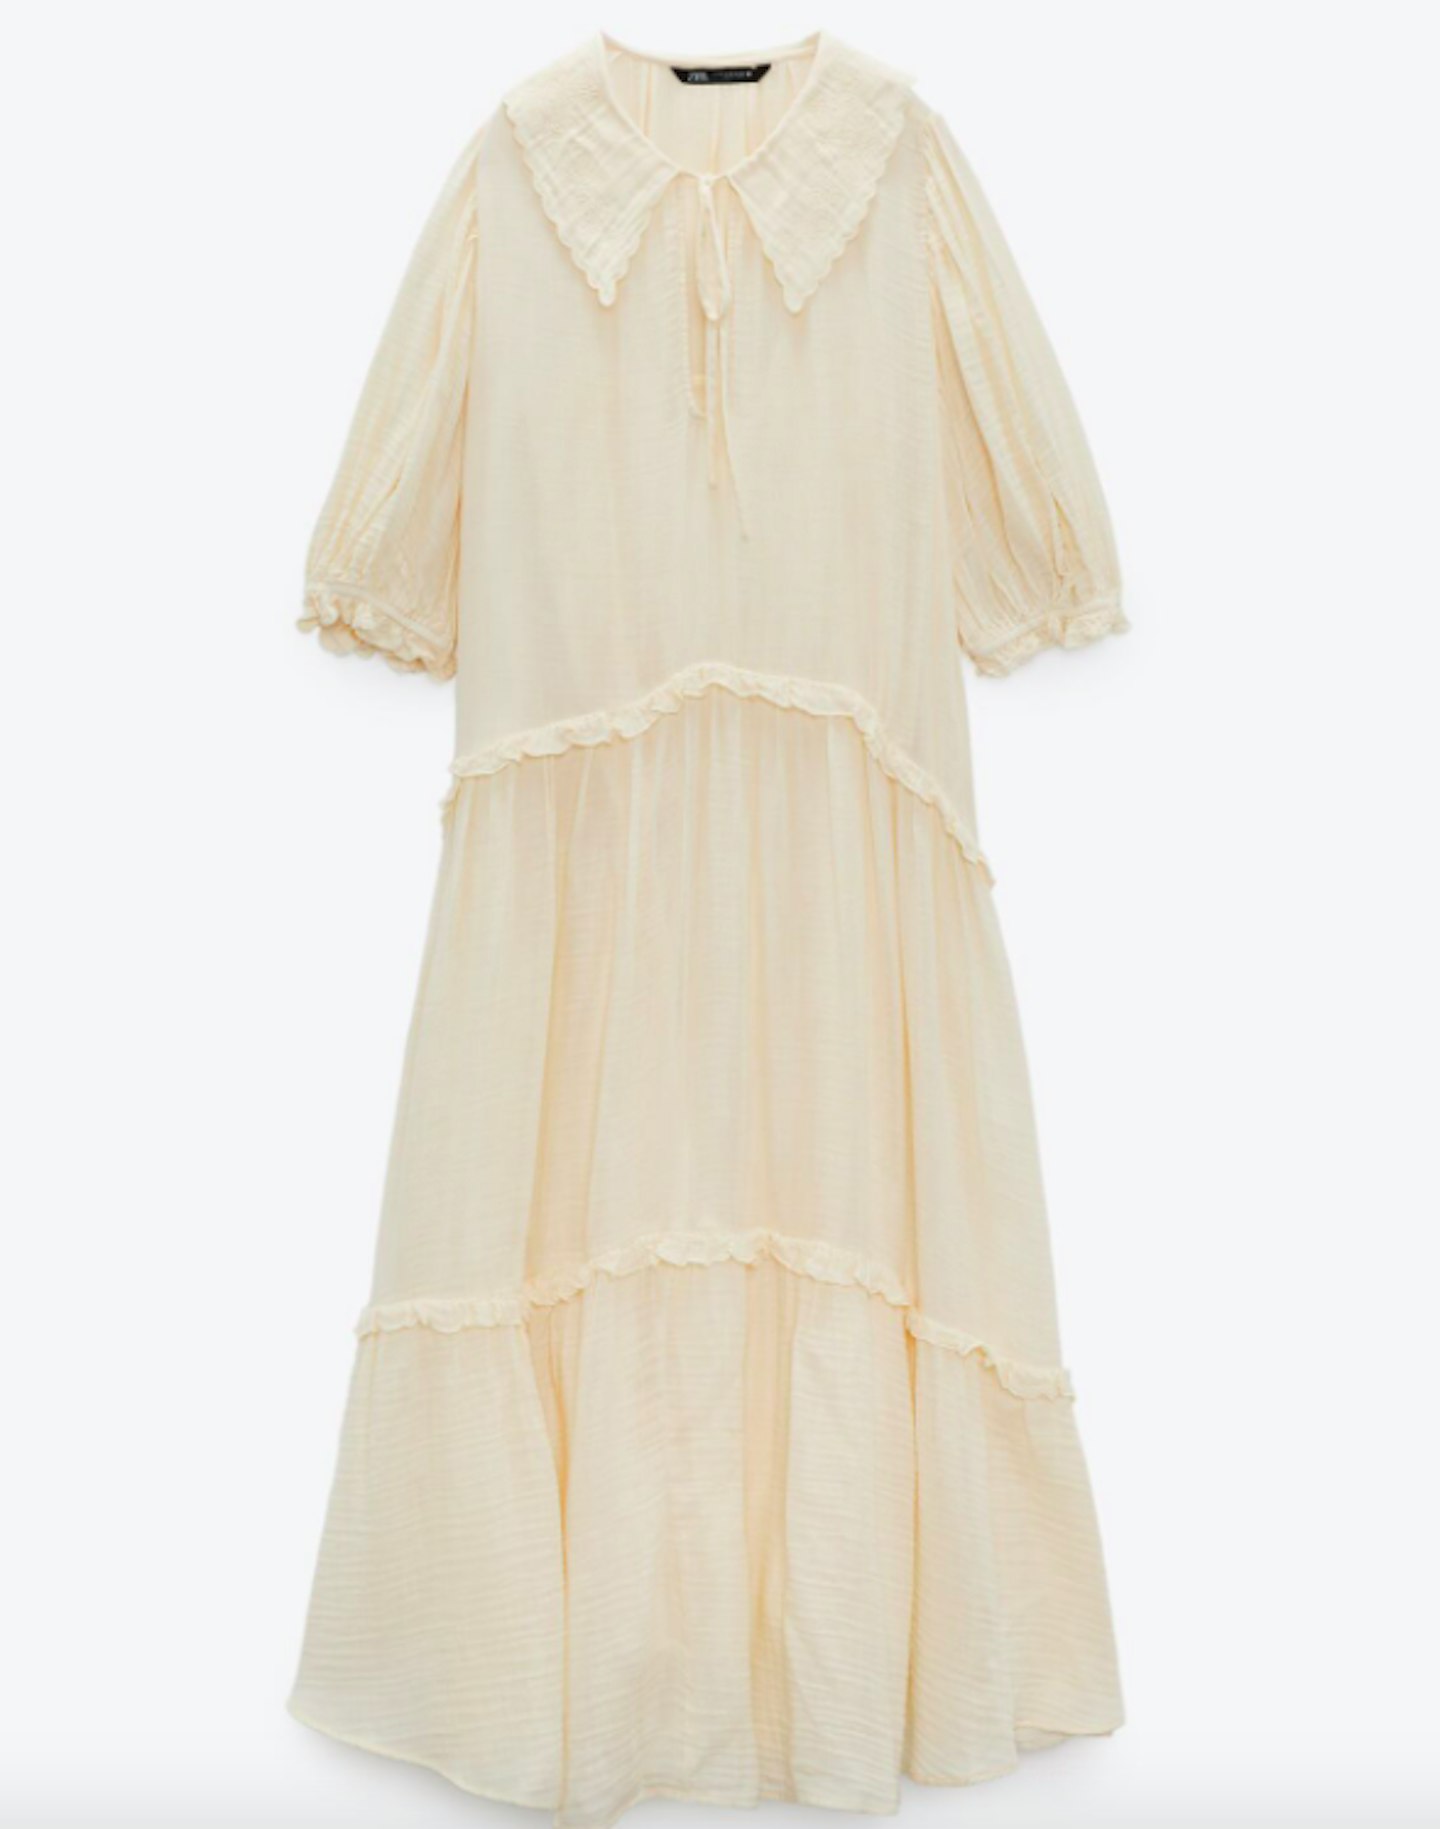 Zara, Midi Dress With Panels, £49.99